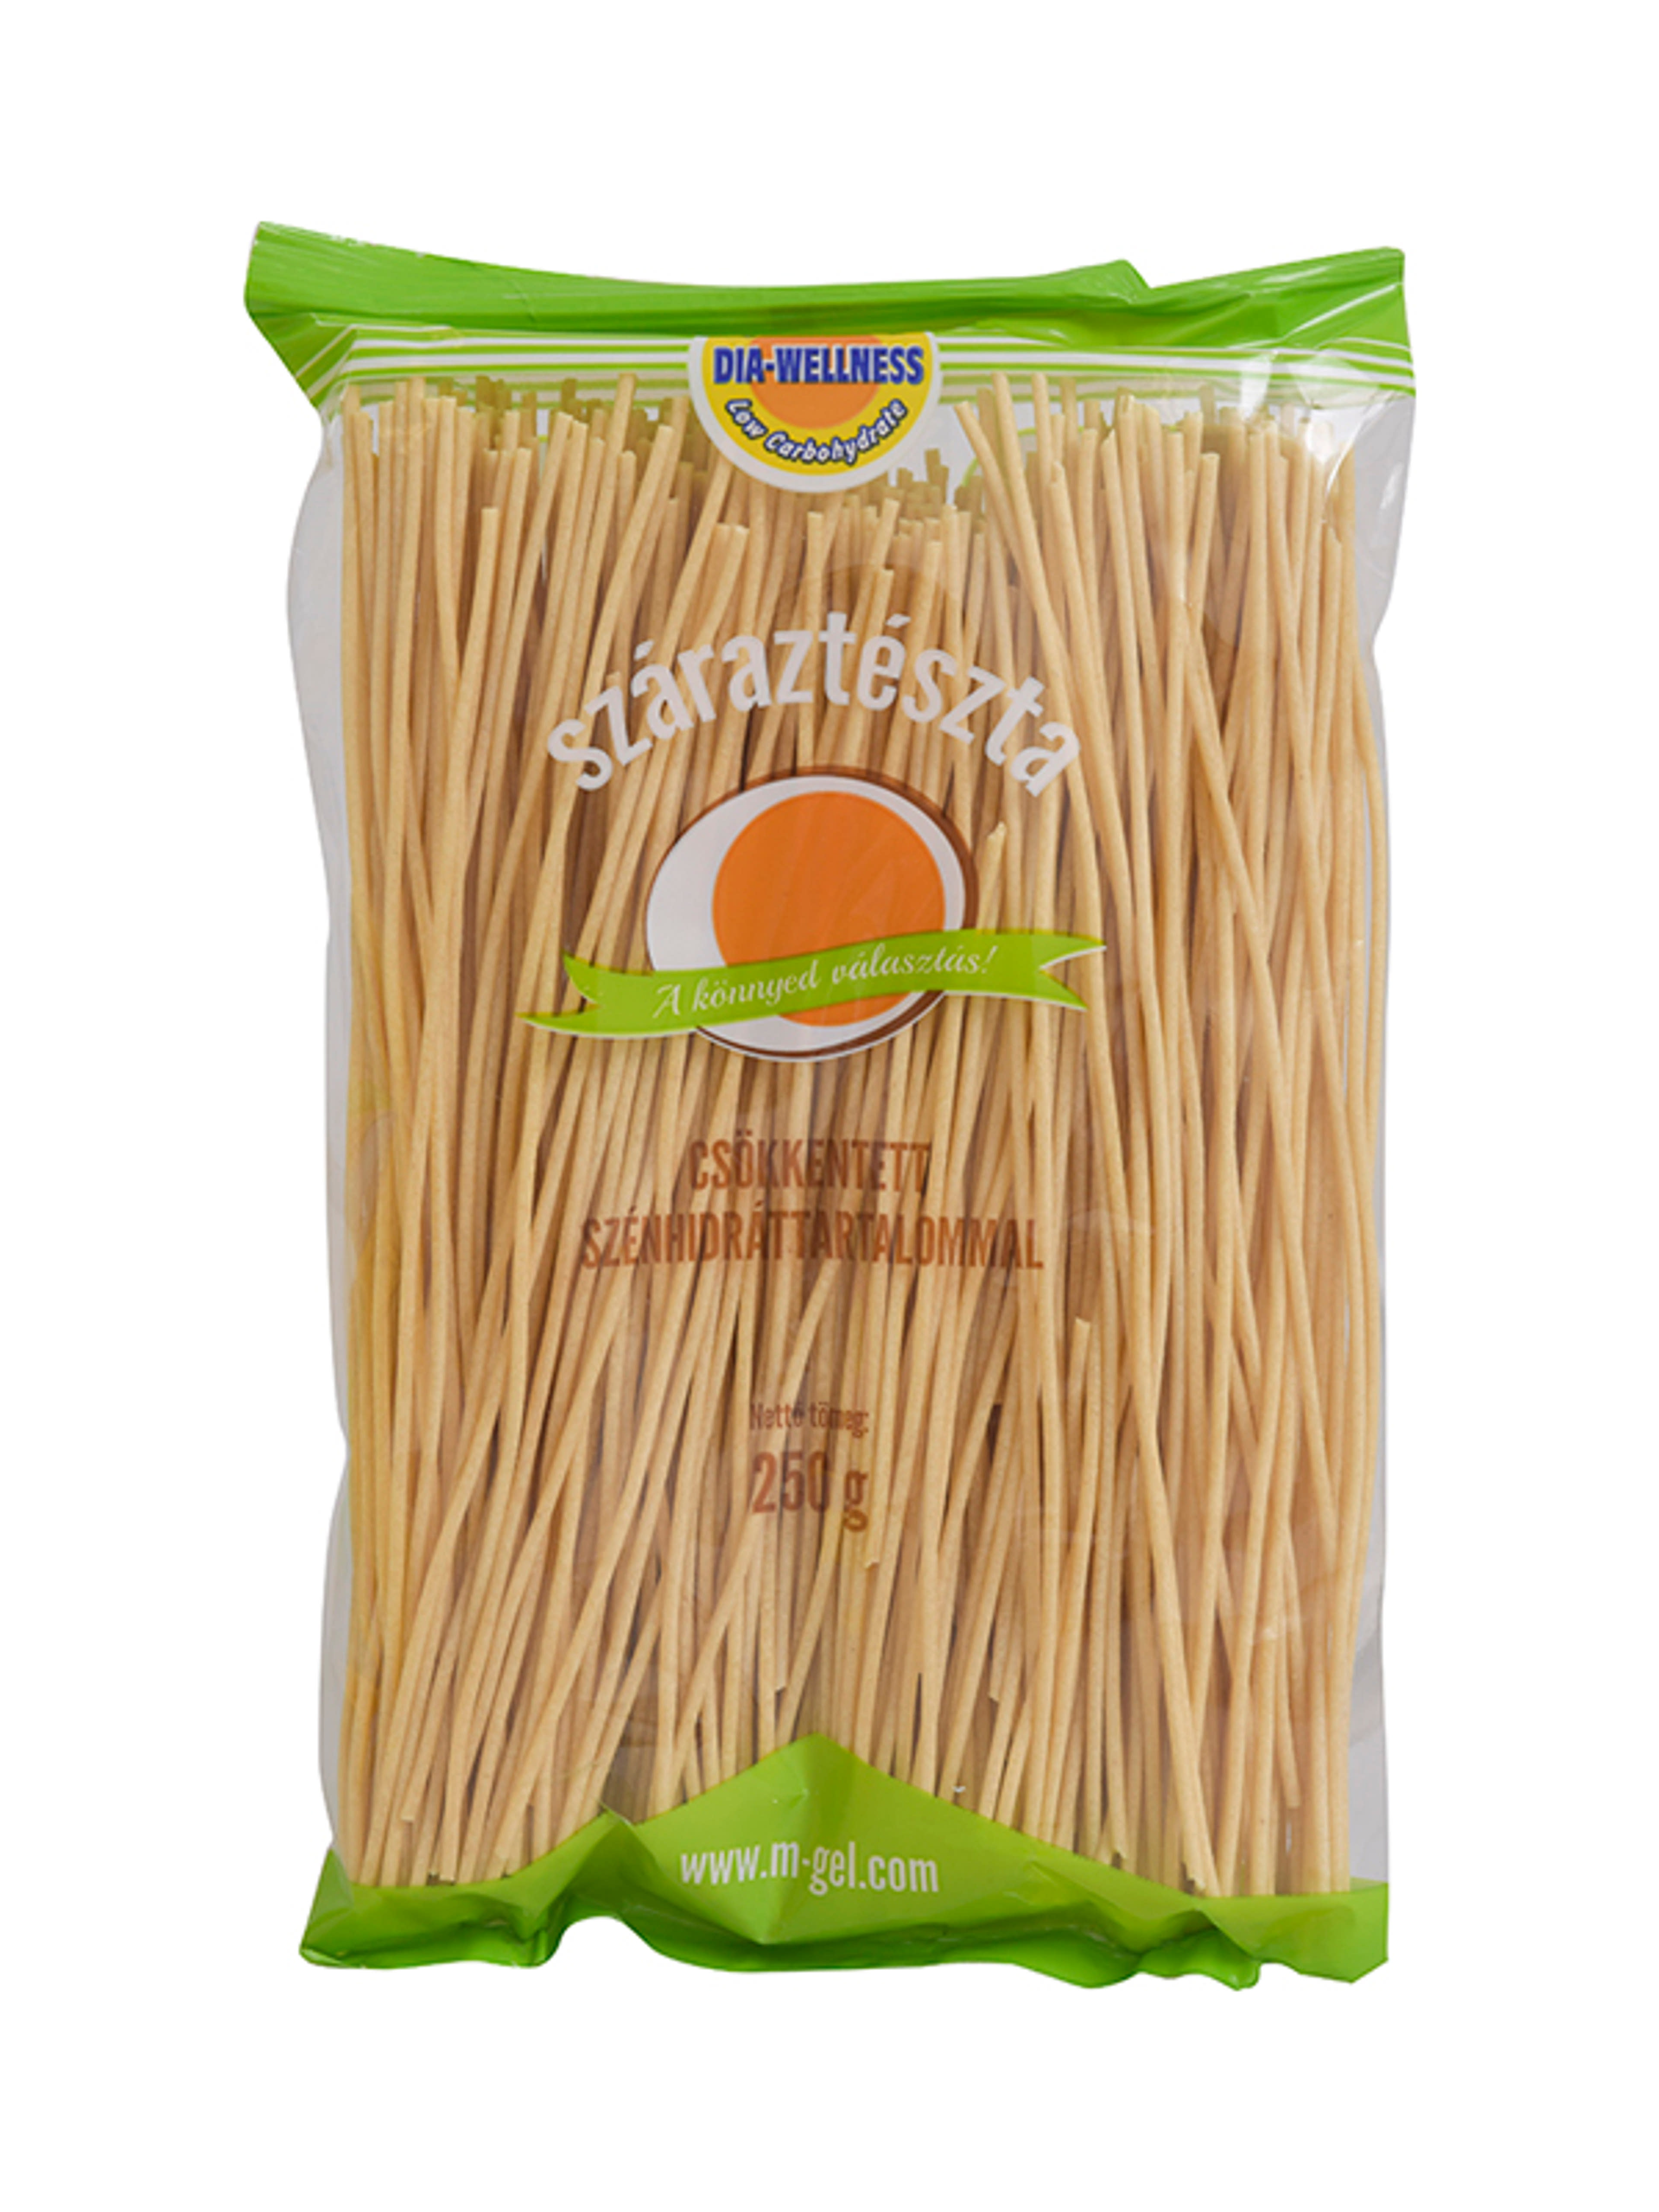 Dia-wellness spagetti szénhidrát csökkentett - 250 g